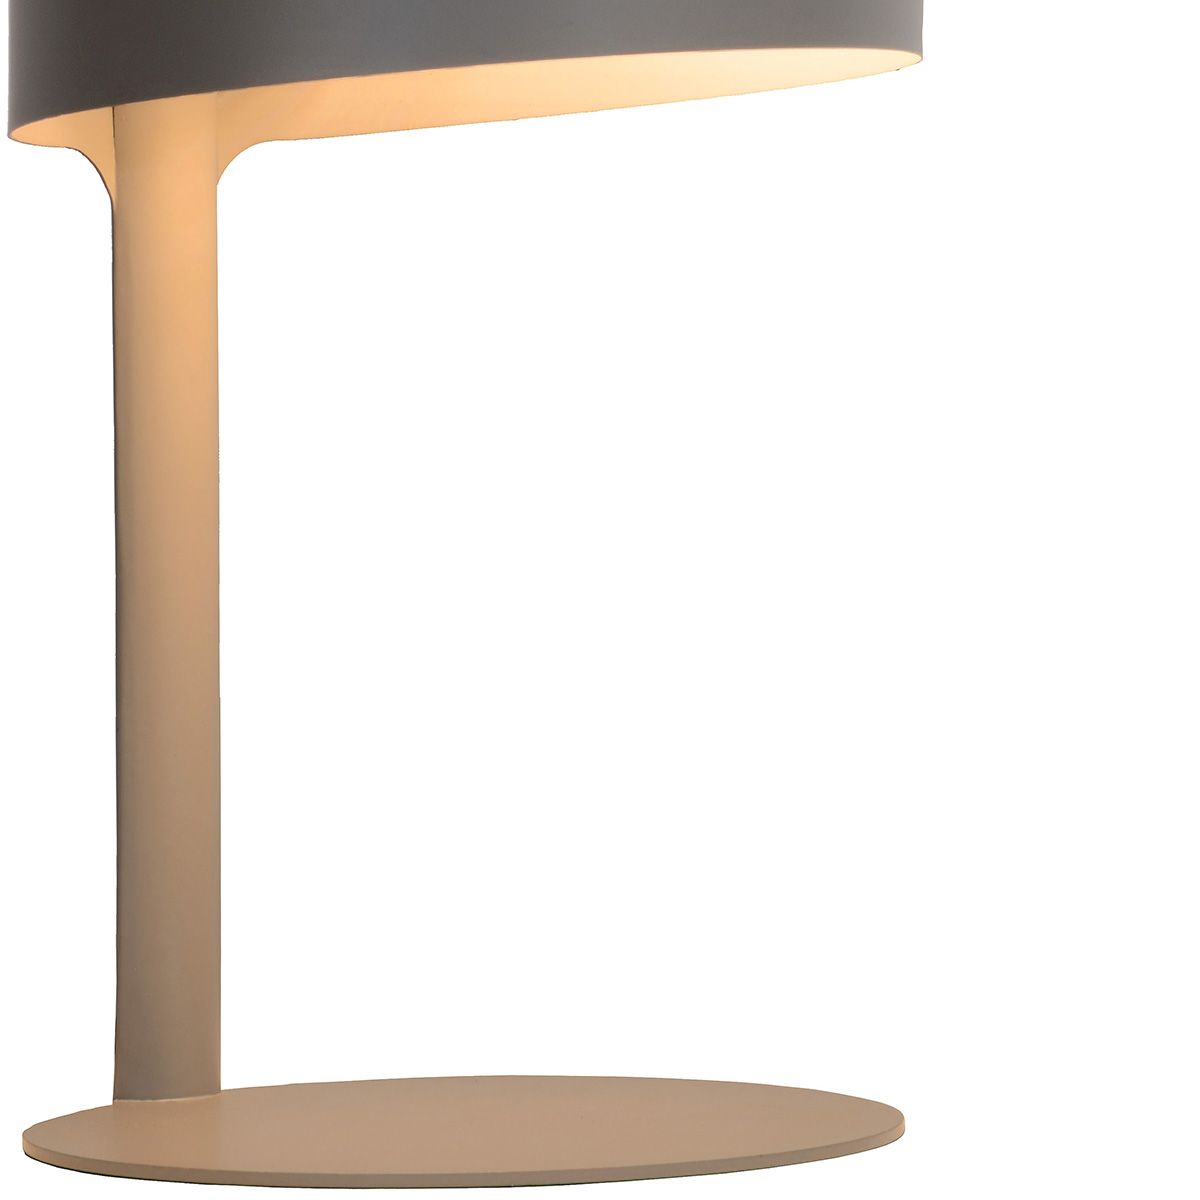 Lampe design KNULLE grise taupe en métal